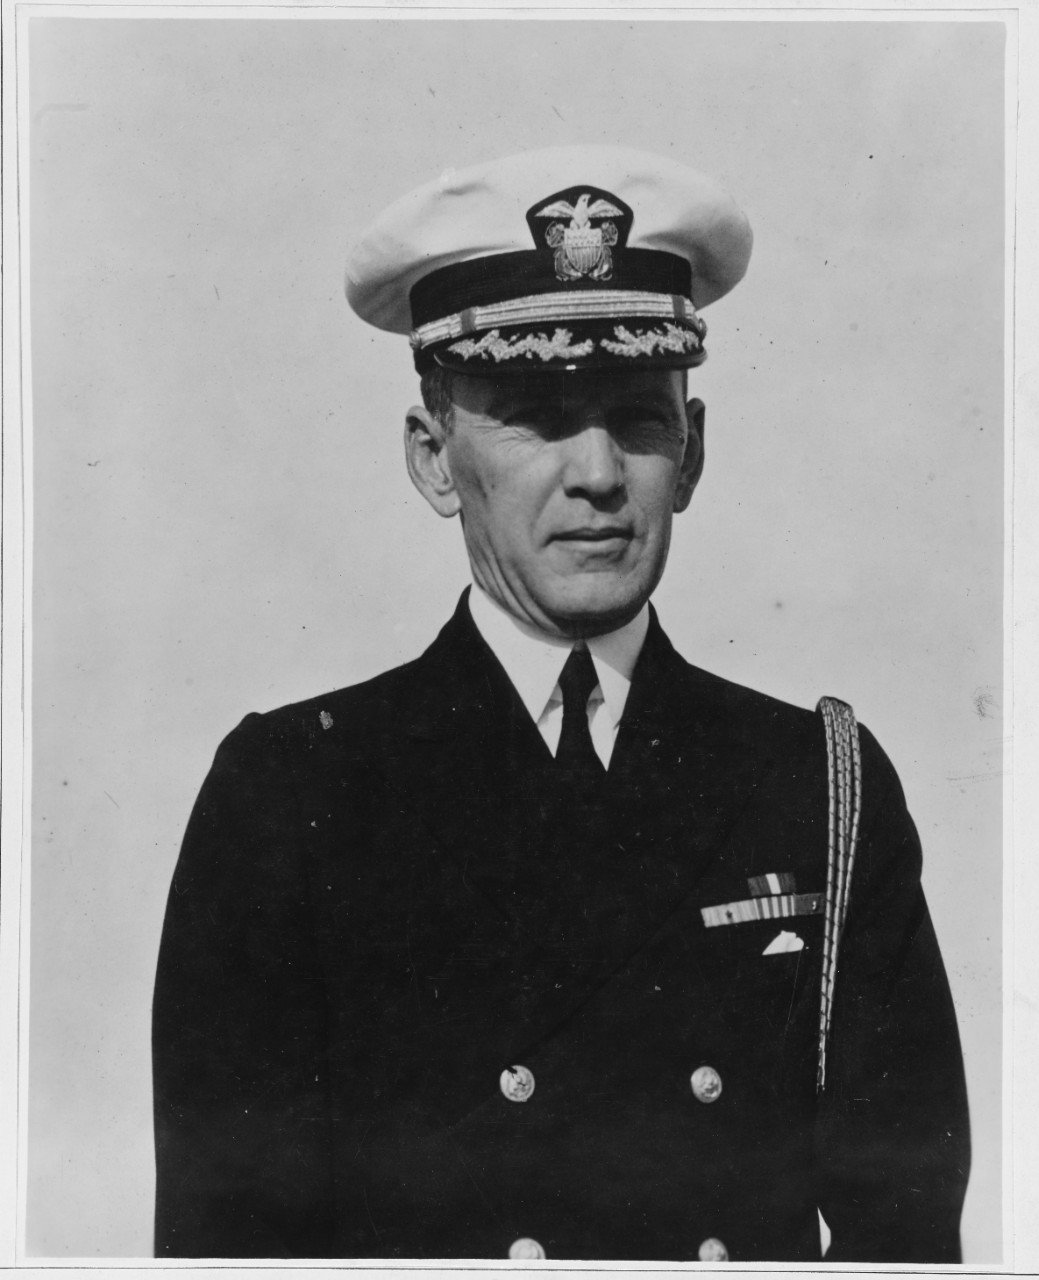 Captain Charles M. Austin, USN